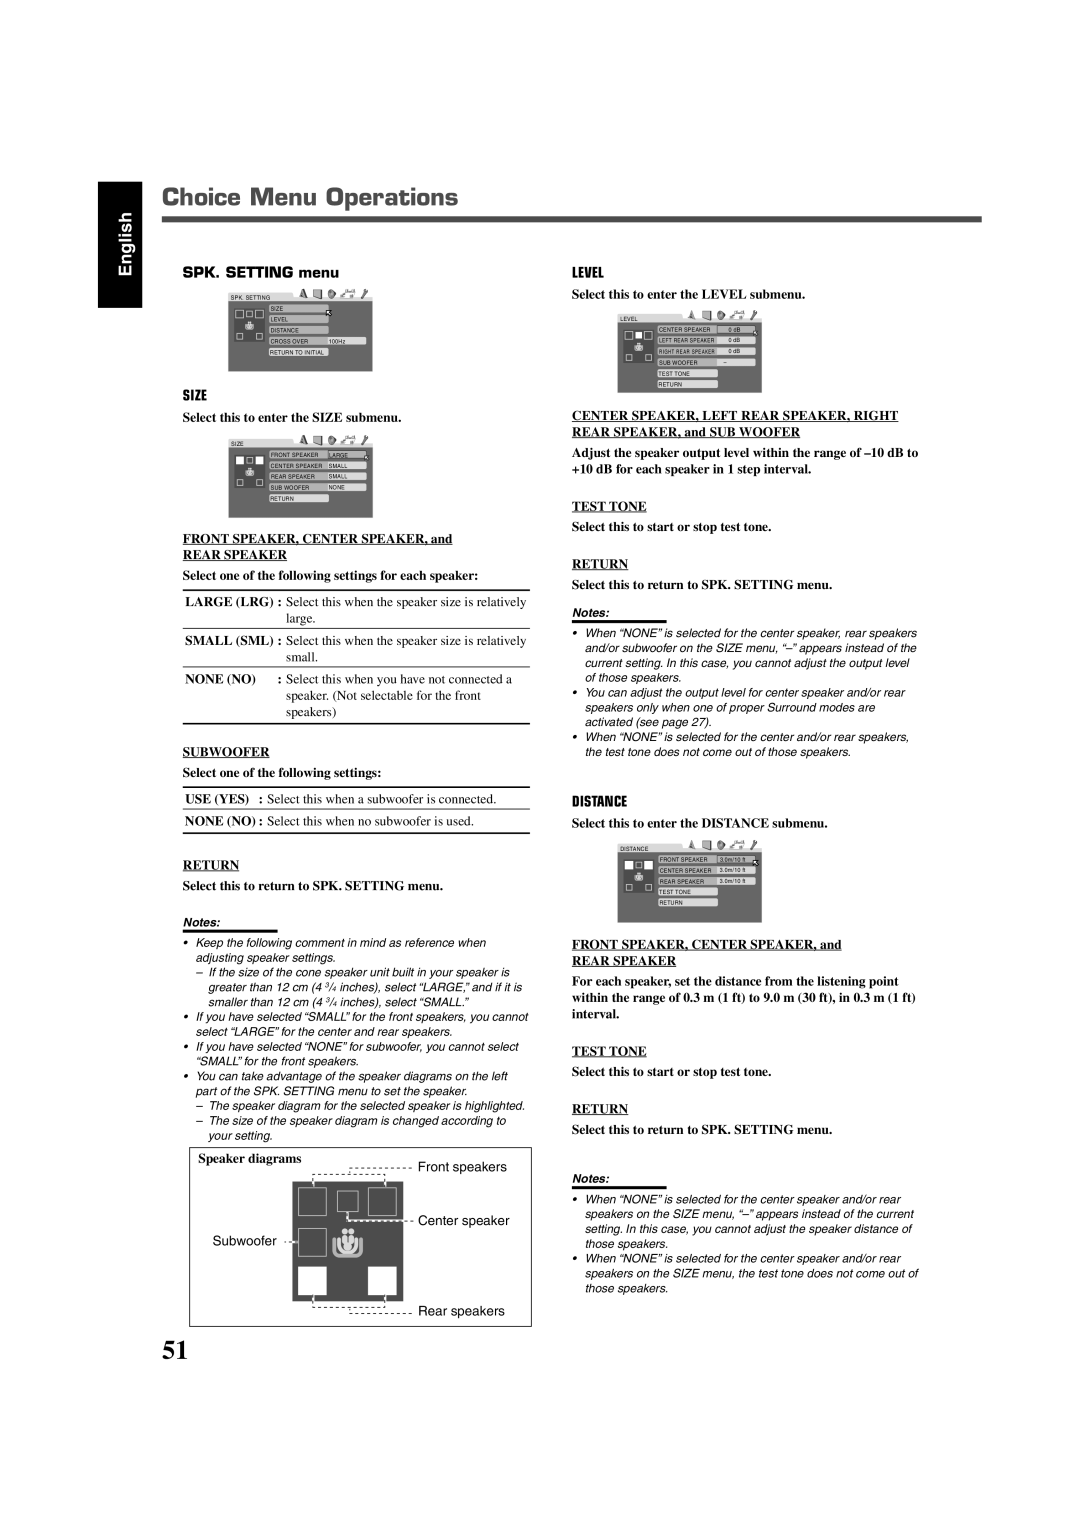 JVC RX-DV3SL manual SPK. Setting menu, Test Tone, Rear Speaker, Subwoofer, Return 